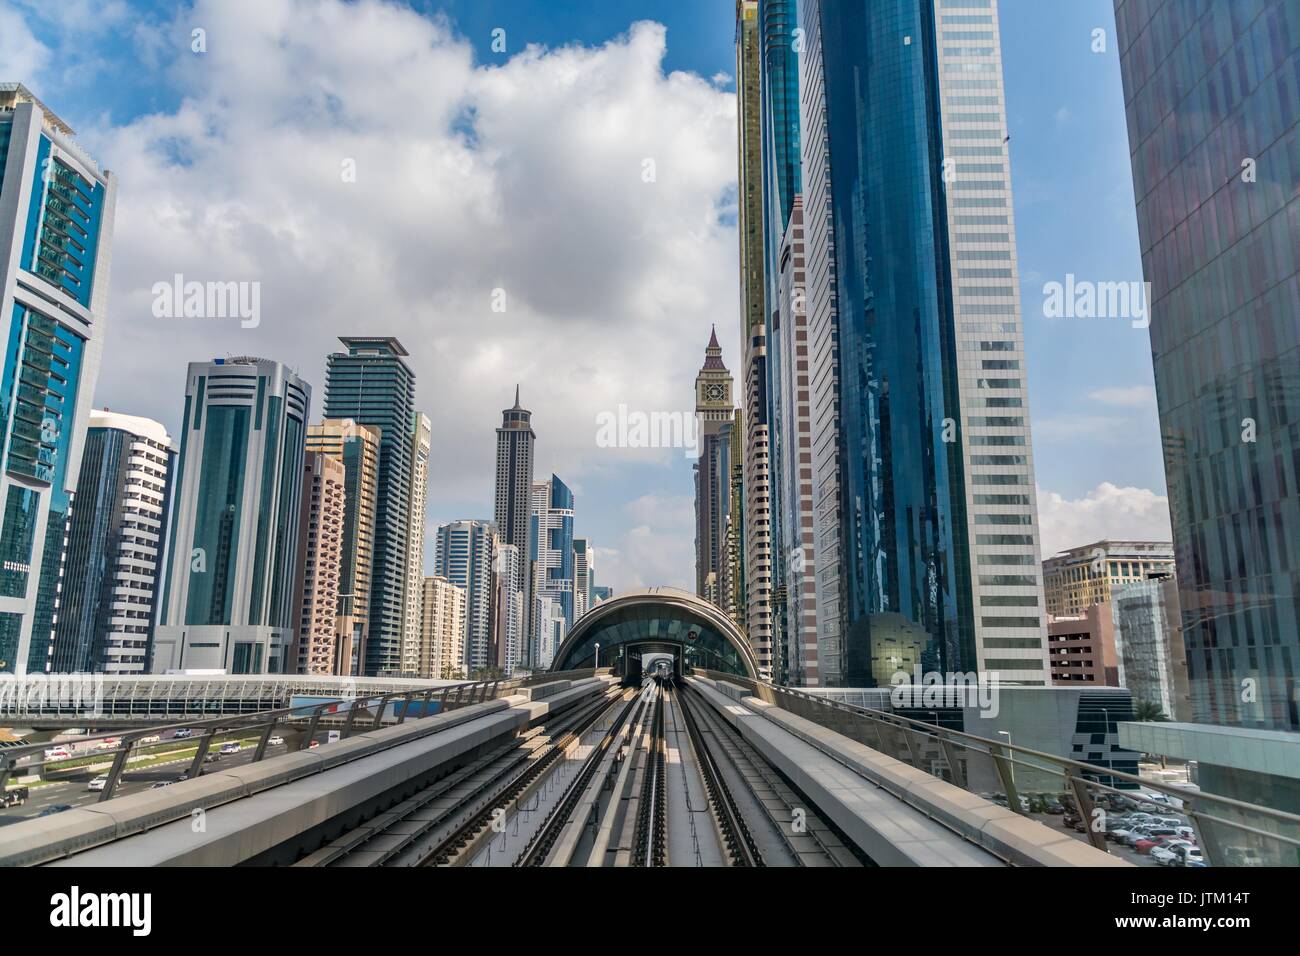 Cityscape of Dubai, view from the Dubai metro, United Arab Emirates Stock Photo